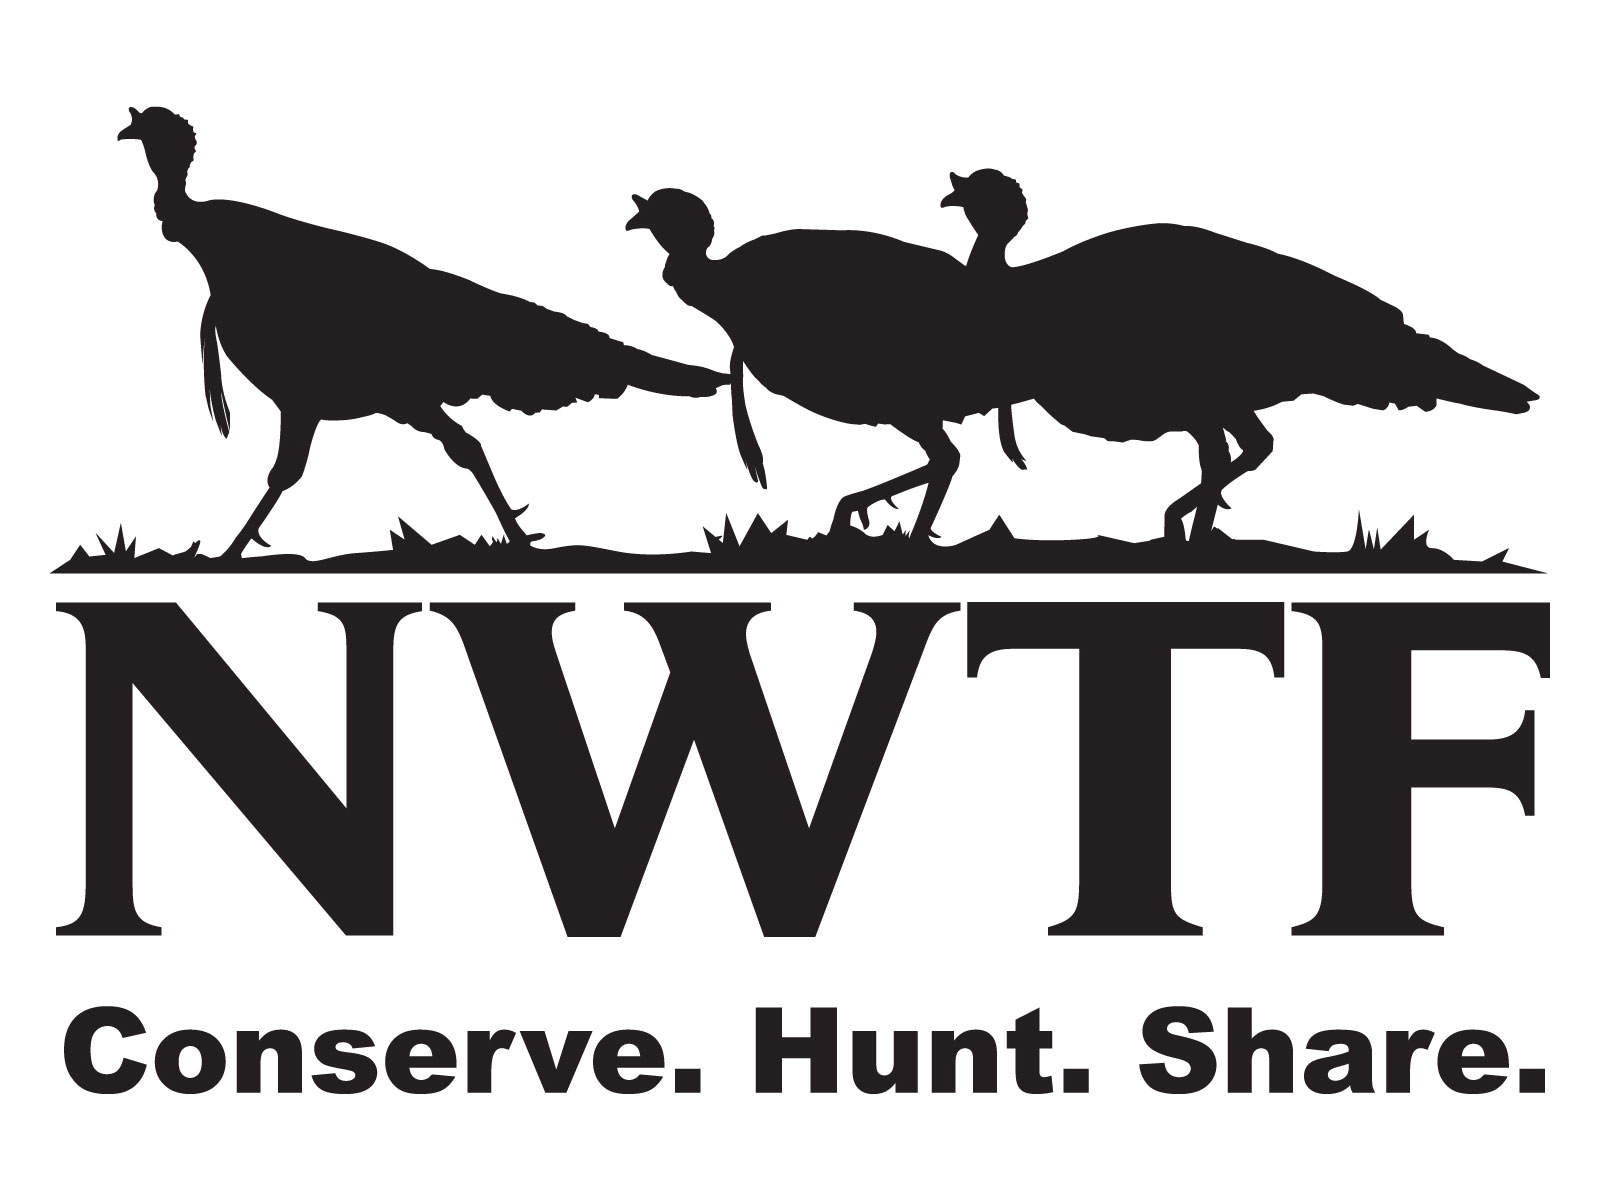 NWFT logo